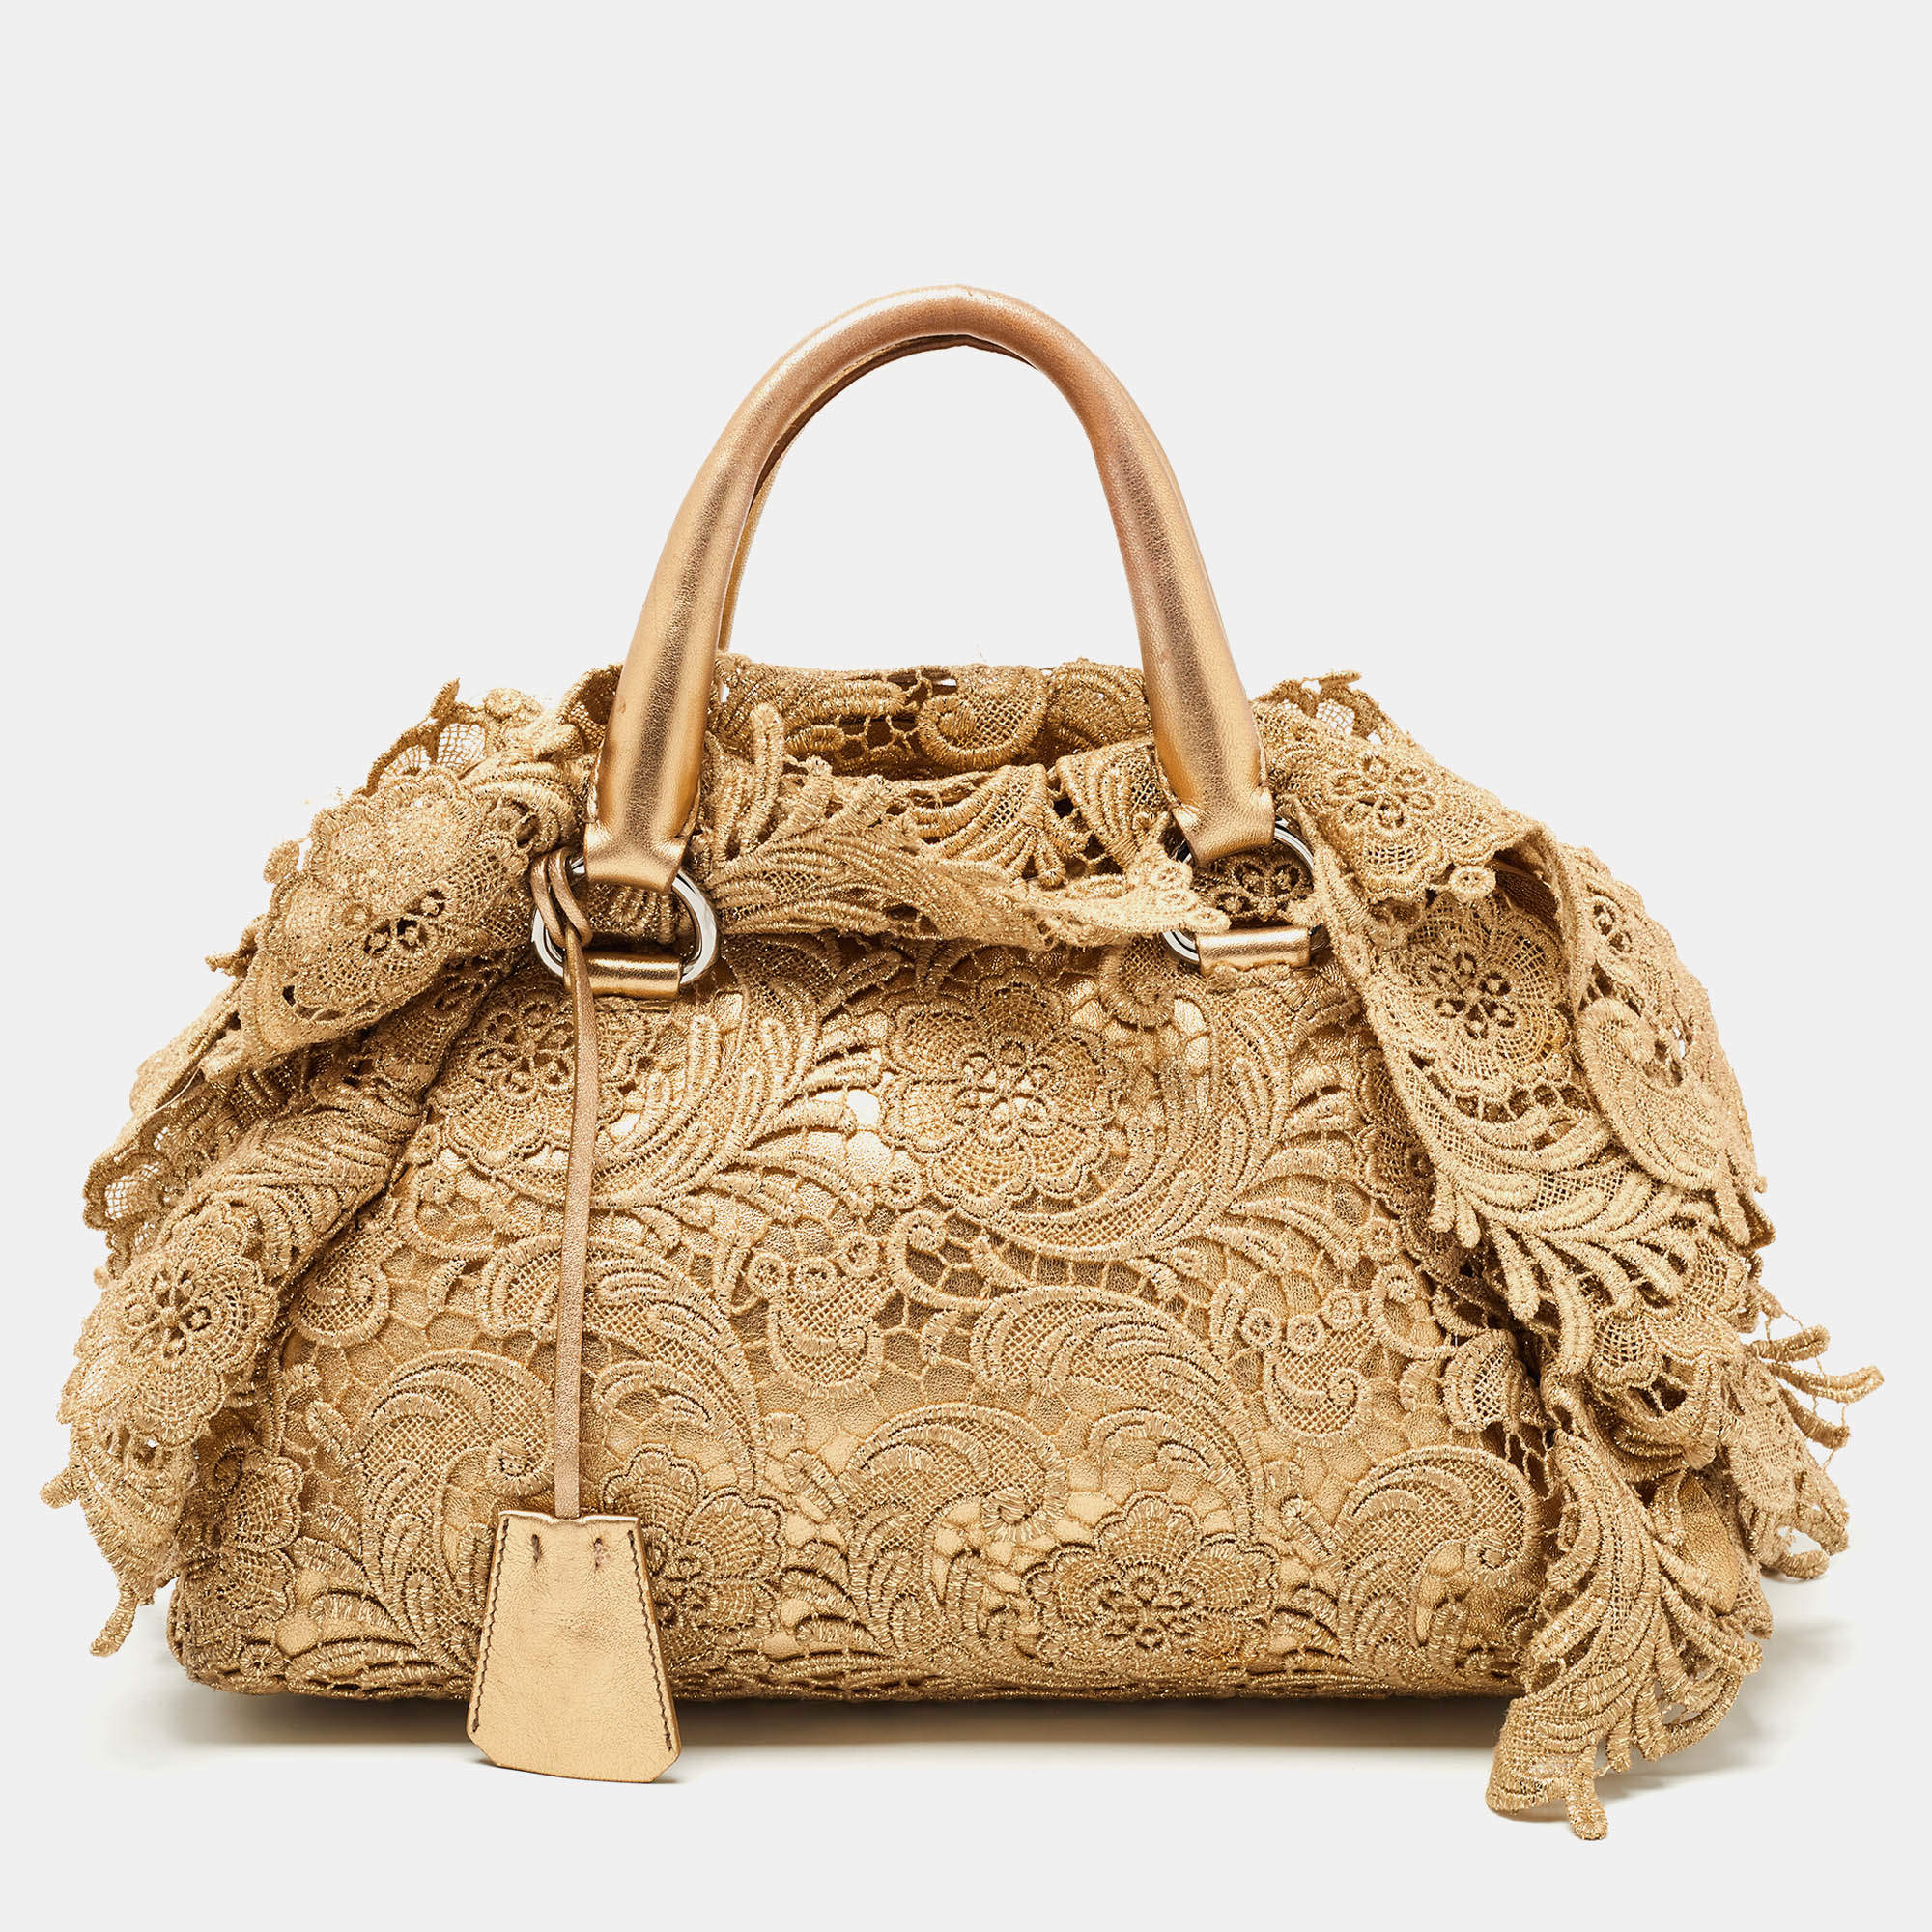 Prada, Bags, New Gold Prada Leather And Lace Bag